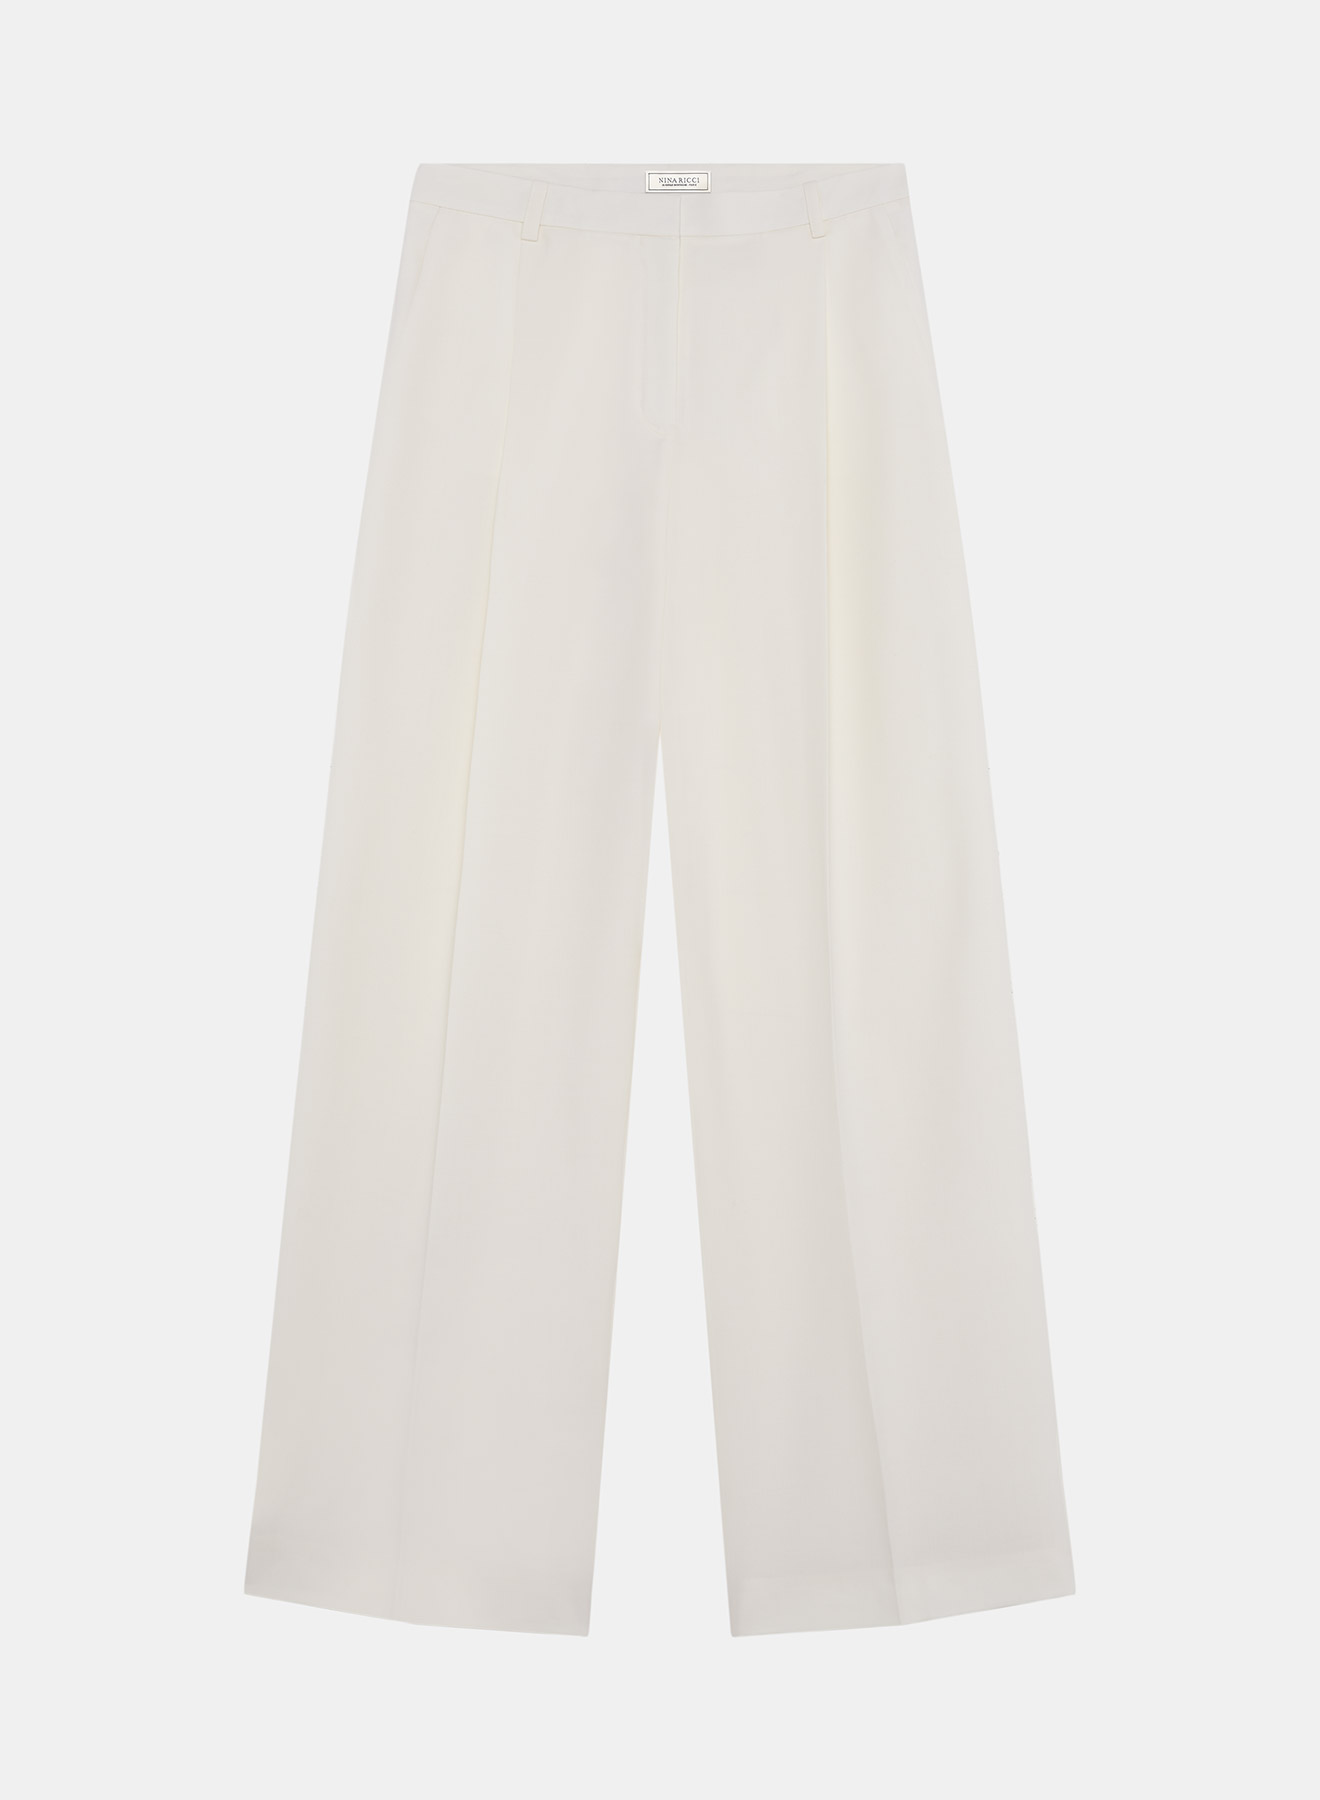 Wide Pleated Pants In Light Ivory Wool Gabardine. - Nina Ricci